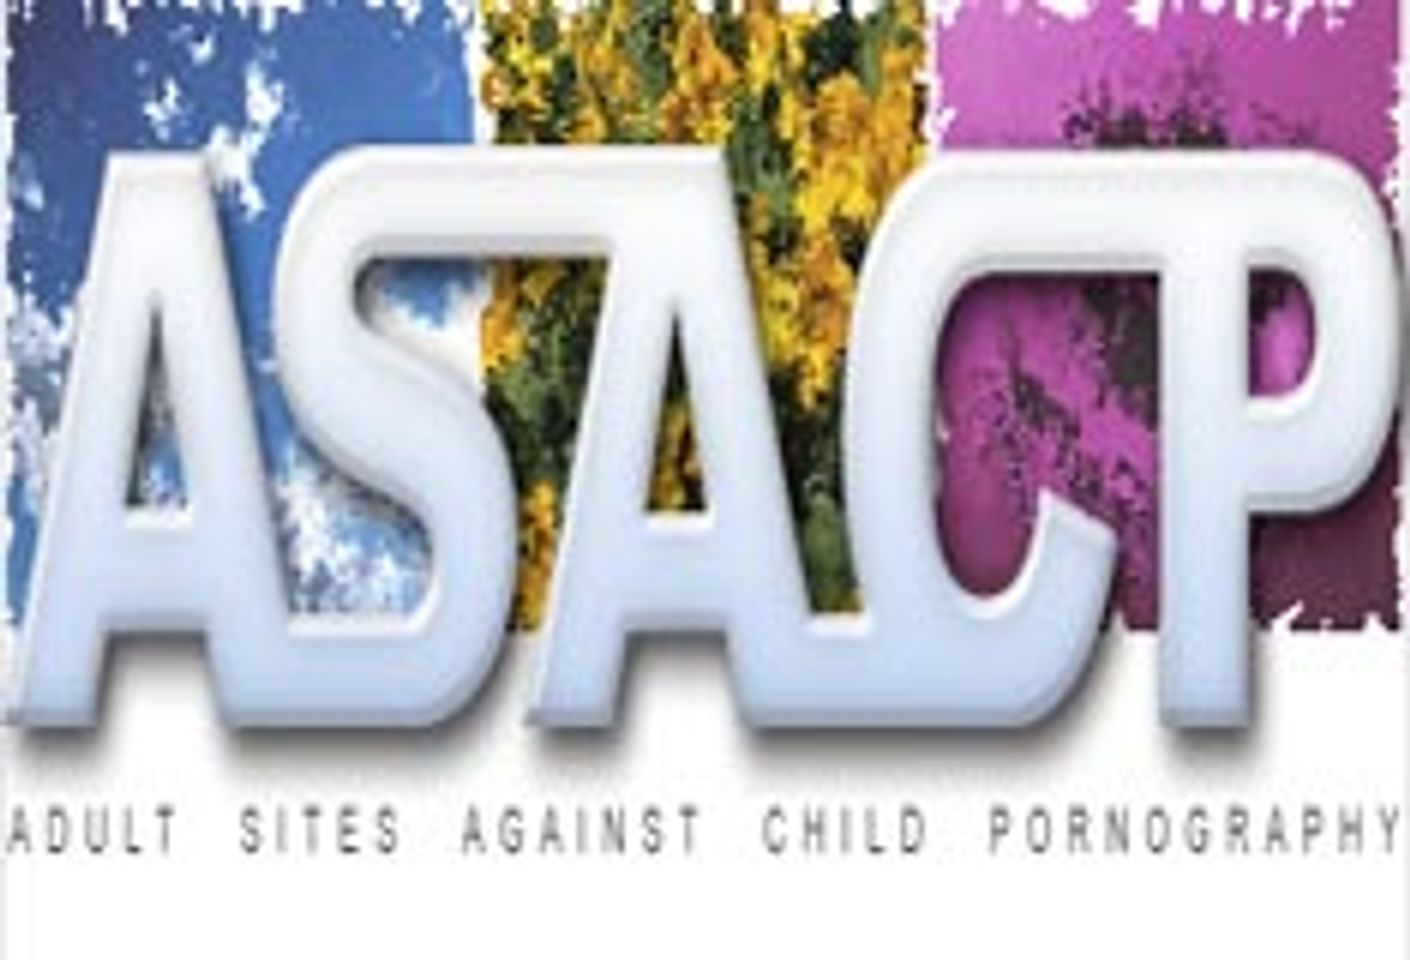 More Child Porn Reports "Sad Accomplishment": ASACP